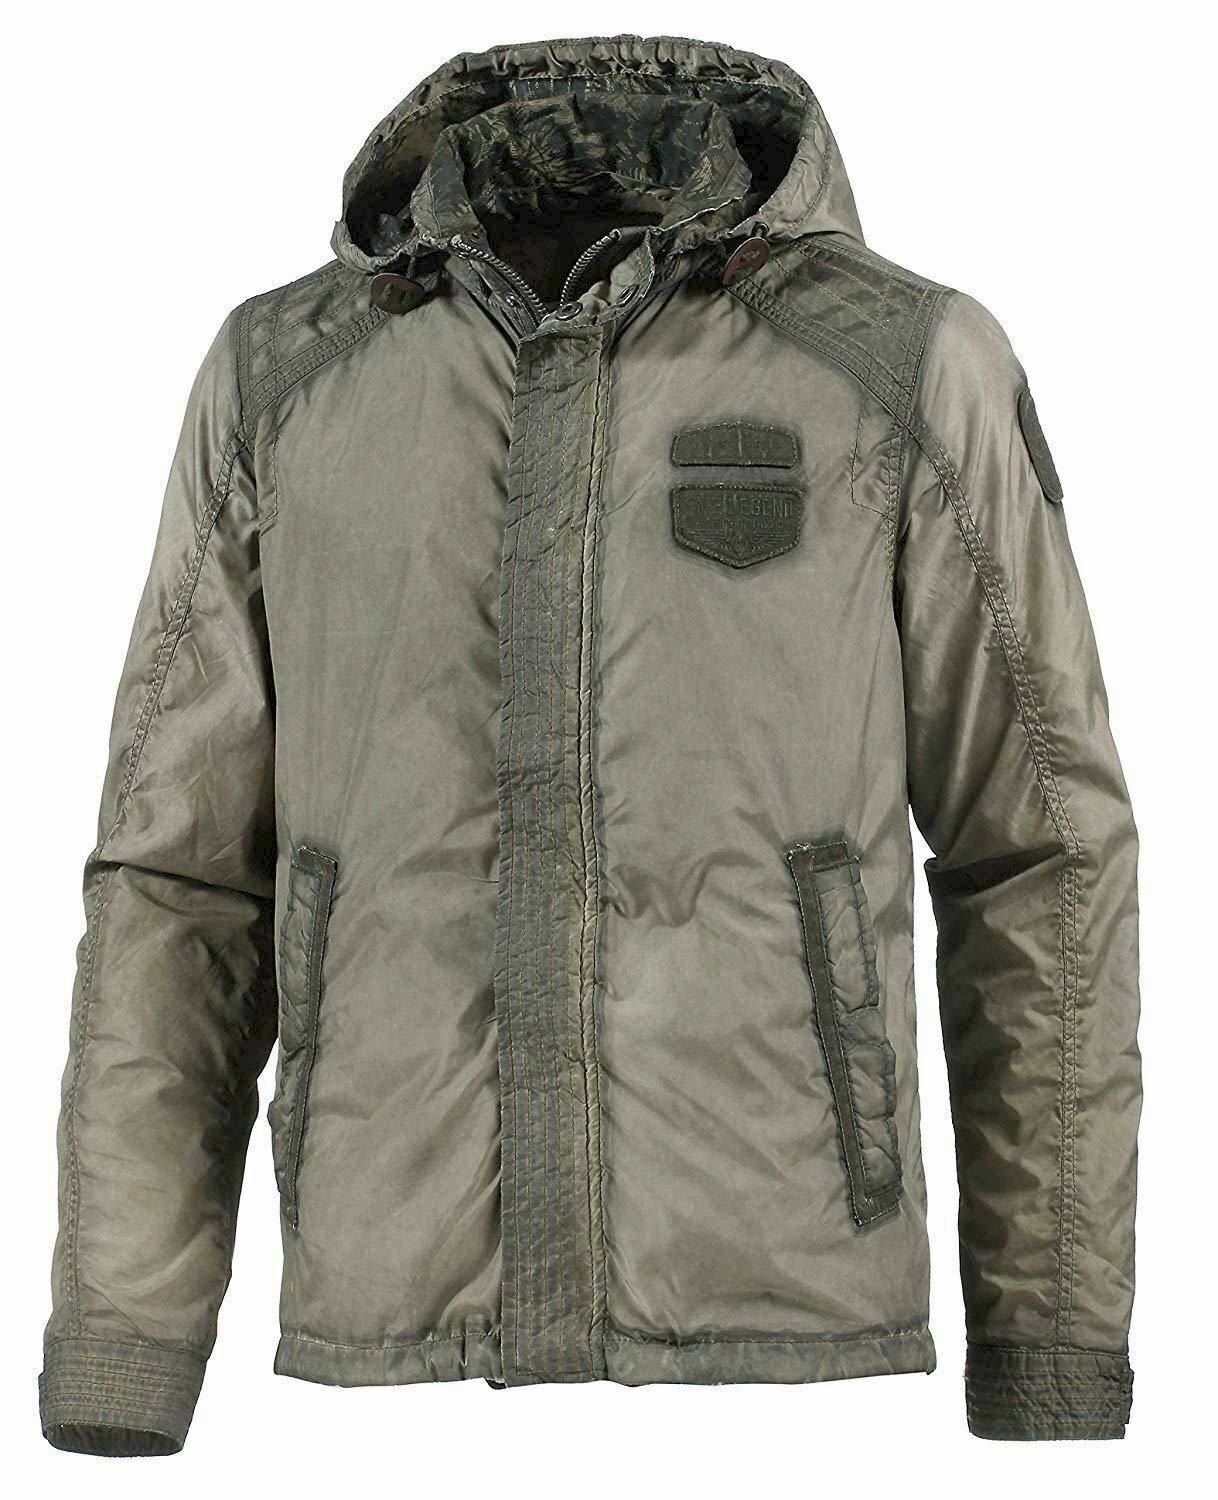 PME LEGEND Men's Distressed Look Casual Jacket, Khaki, size Medium